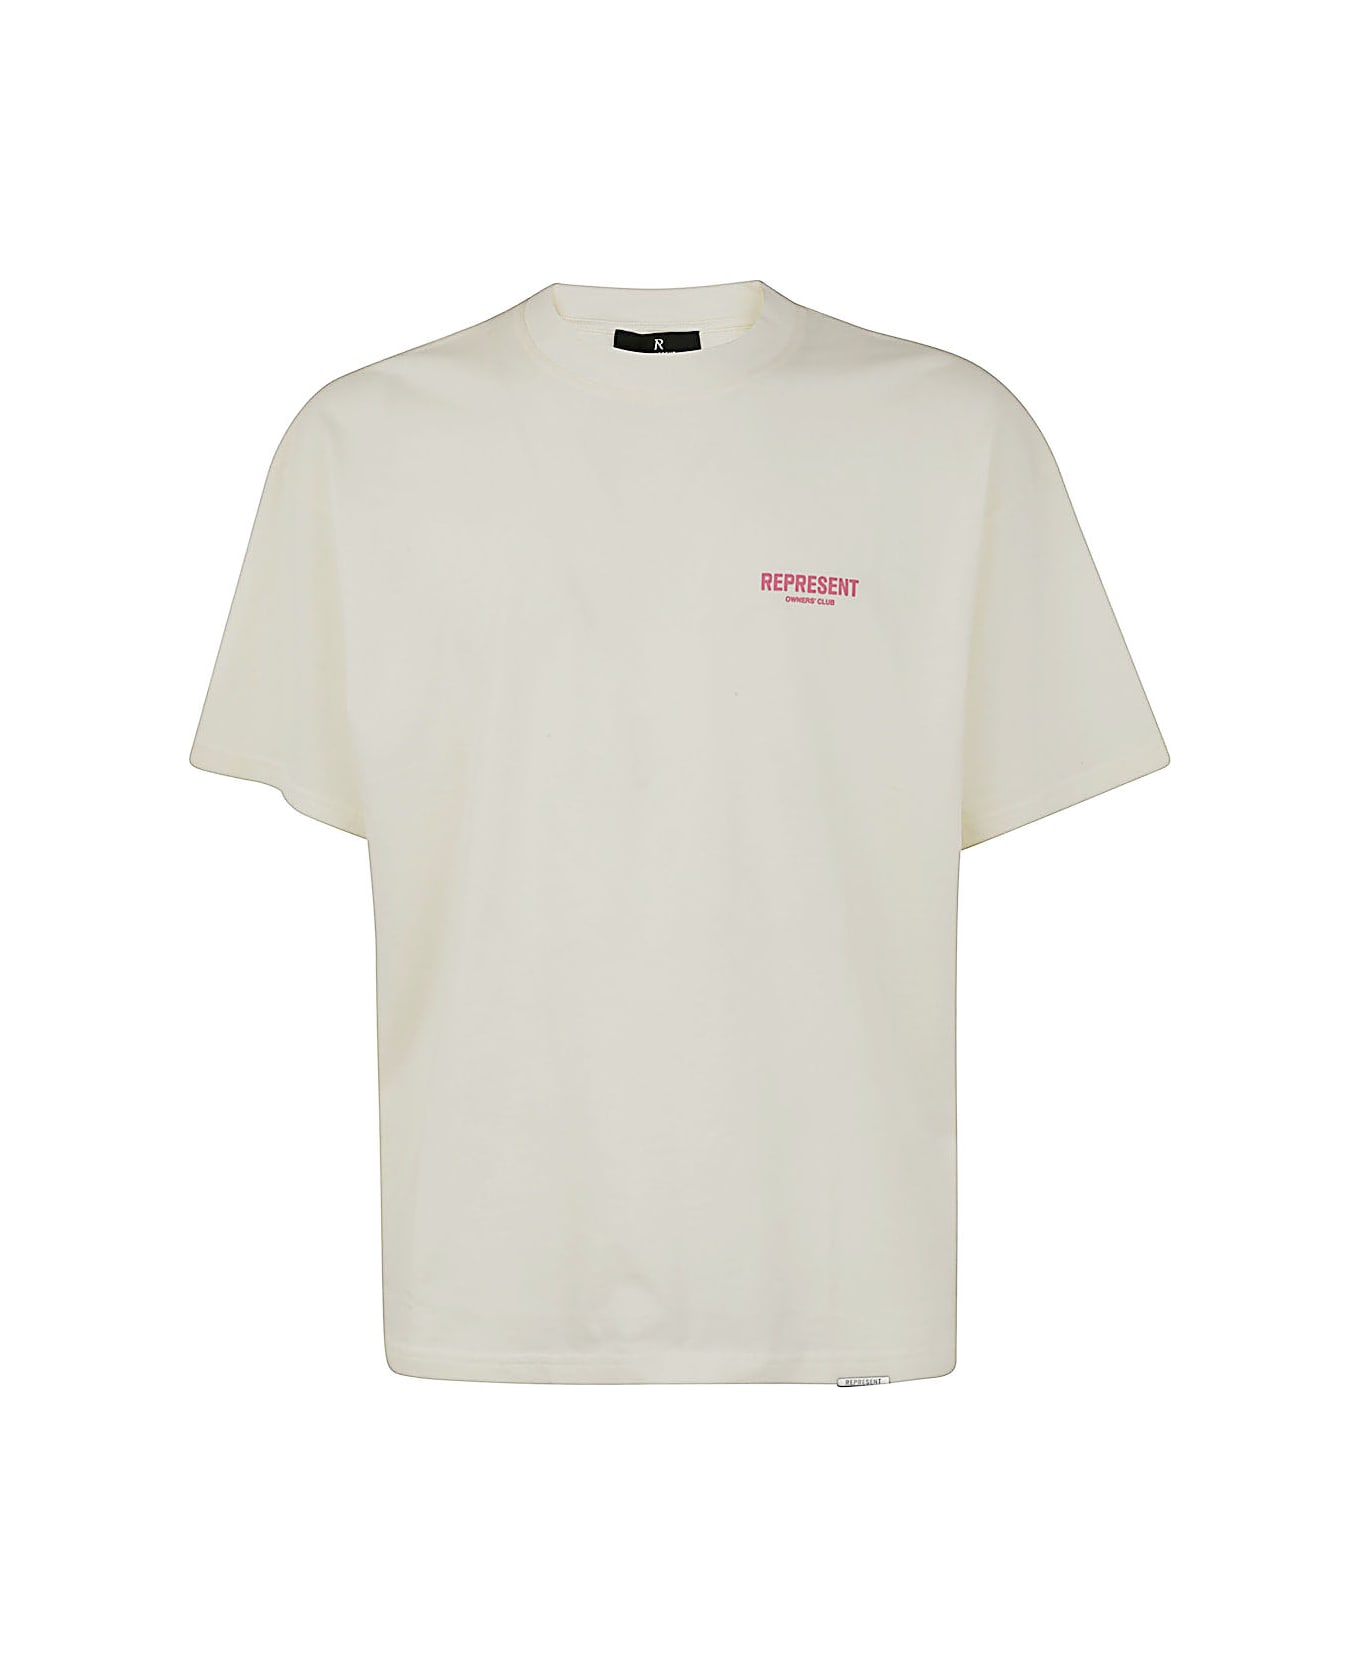 REPRESENT Owners Club T-shirt - White Bubblegum Pink シャツ